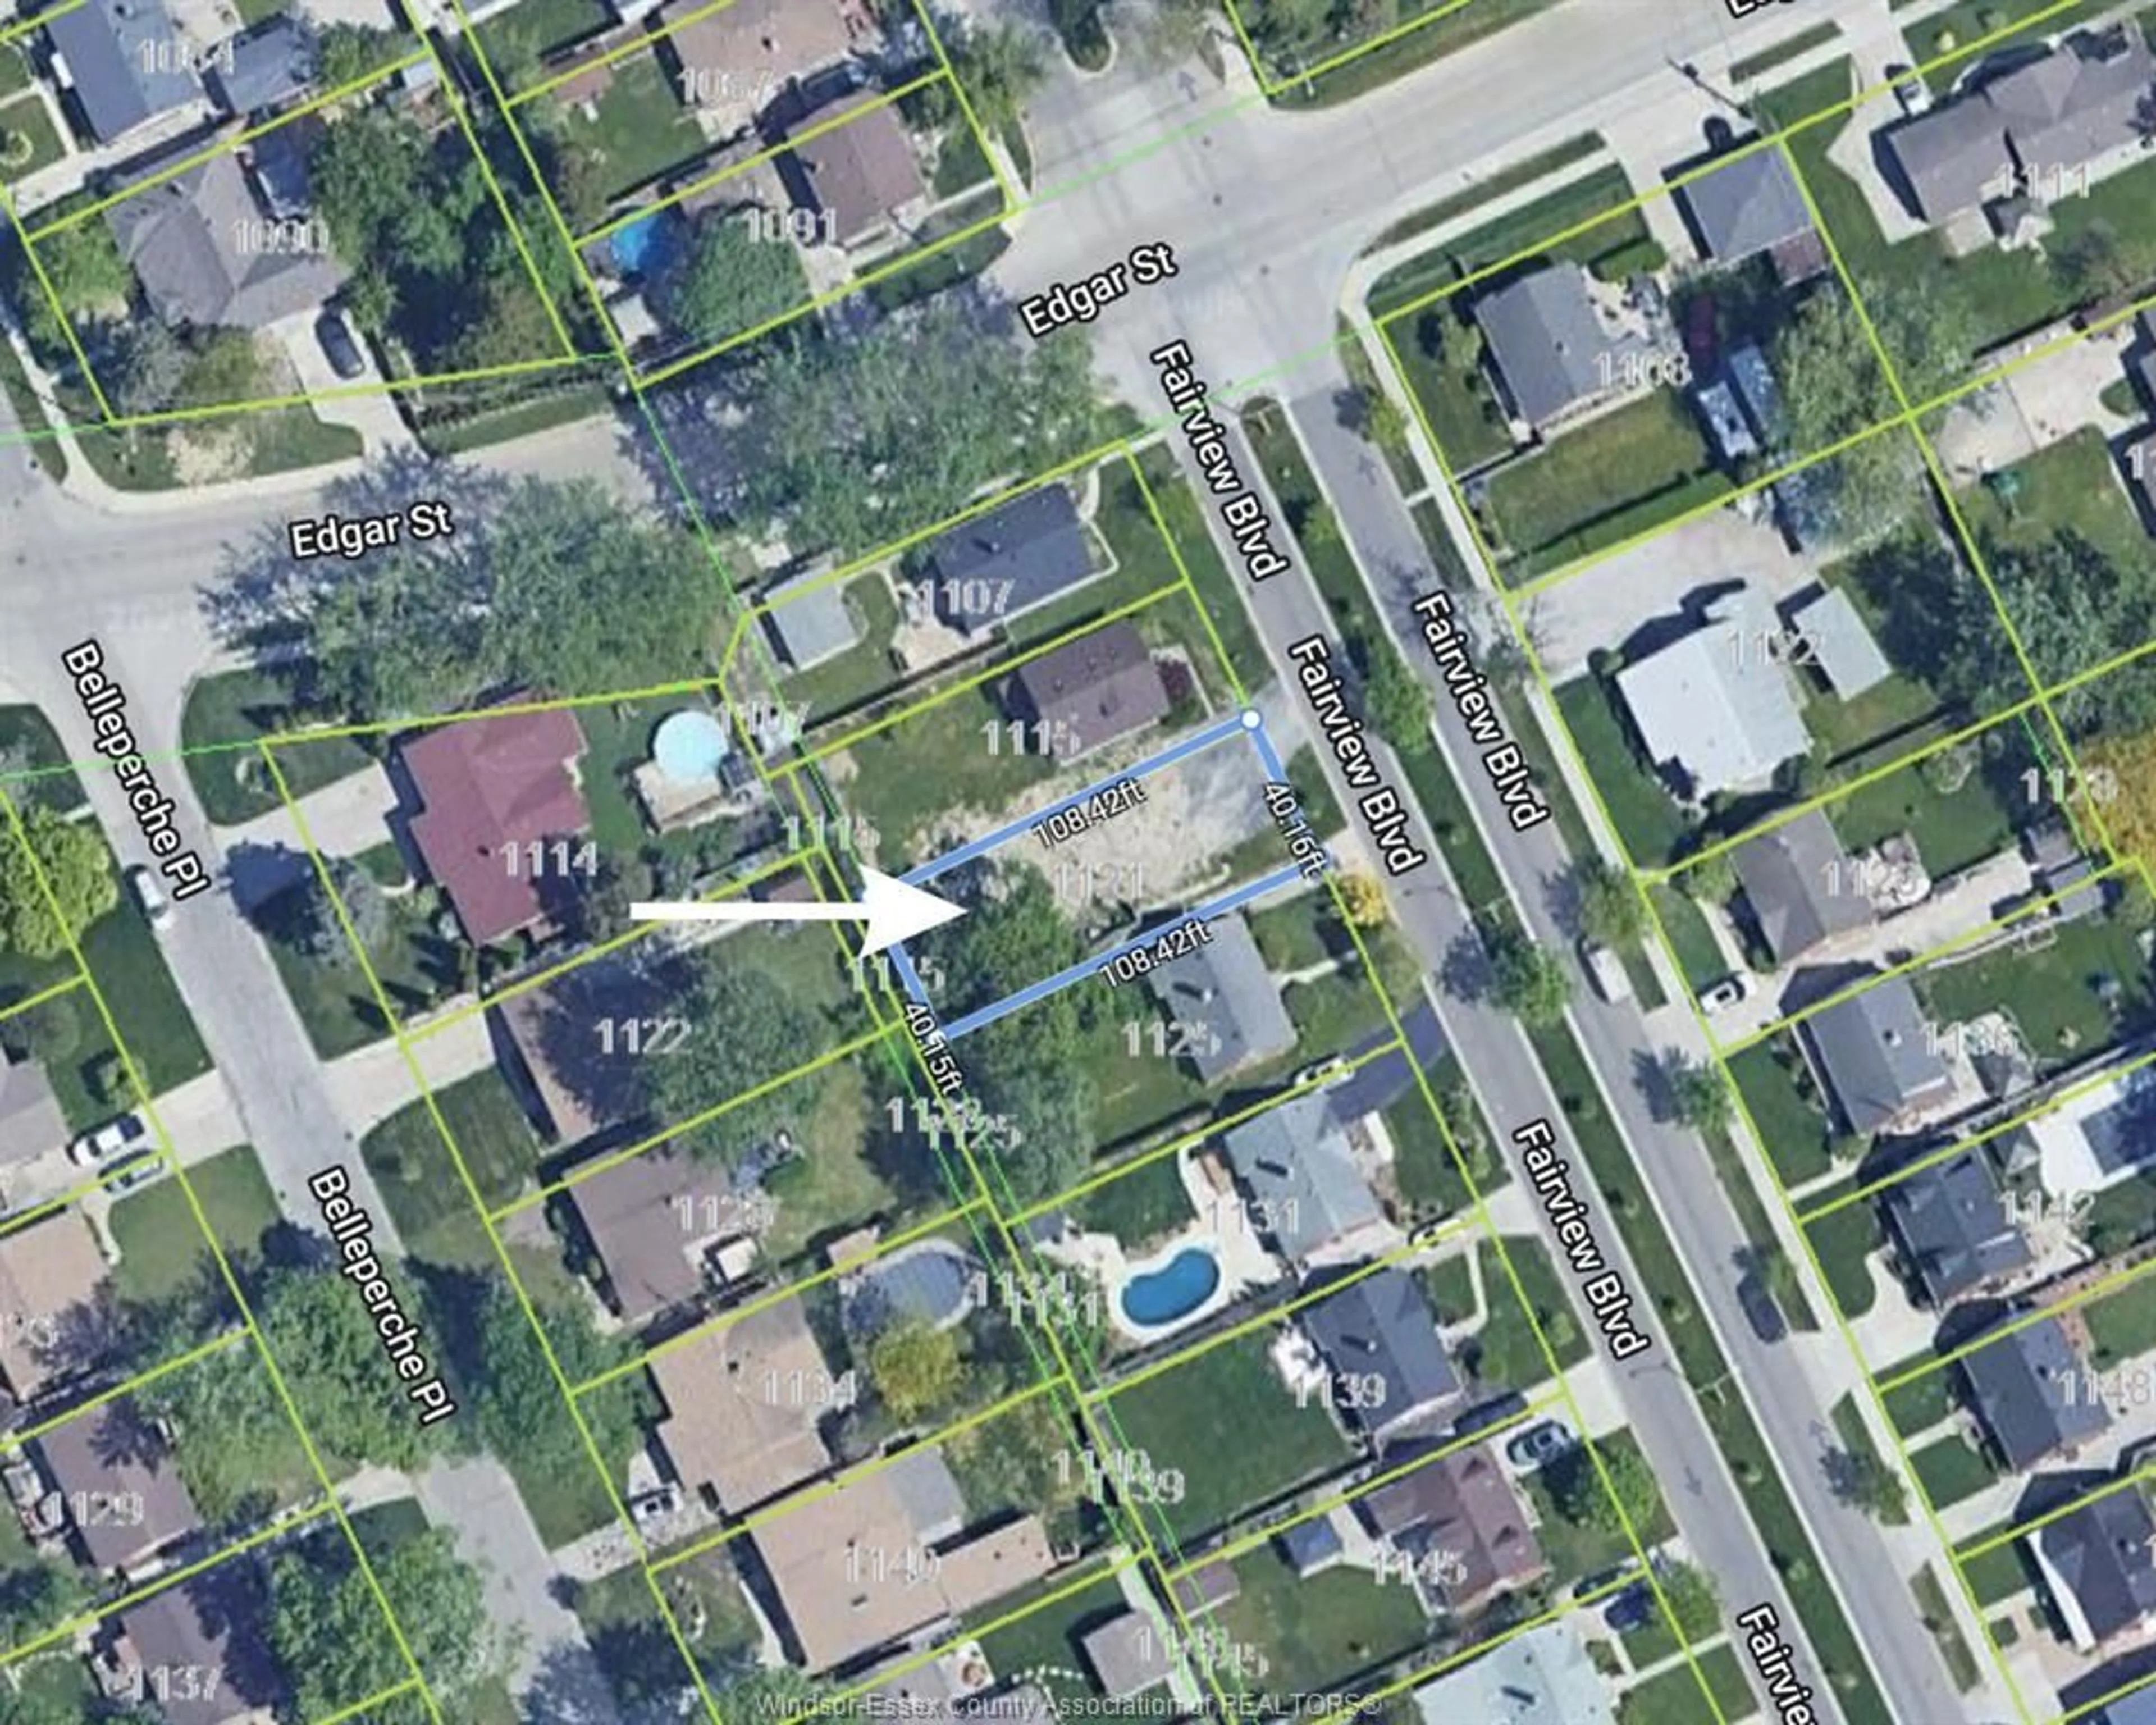 Street view for 1121 Fairview, Windsor Ontario N8S 3E8